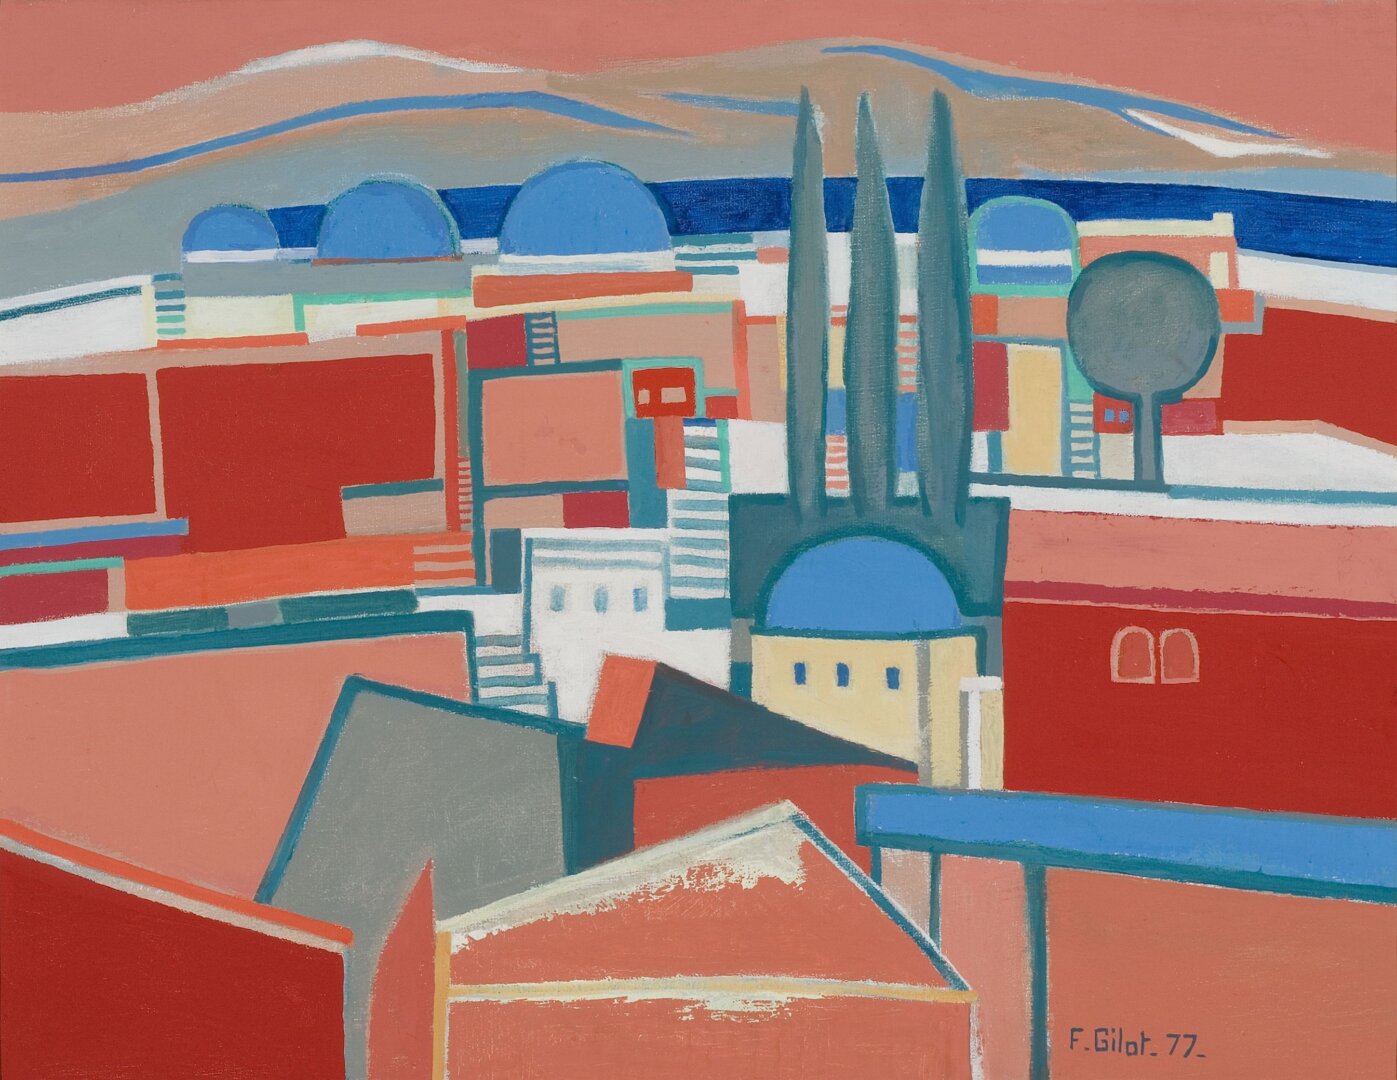 Françoise Gilot: Keleti város I.- II., 1977, olaj, vászon, 50x66 cm, Várfok Galéria